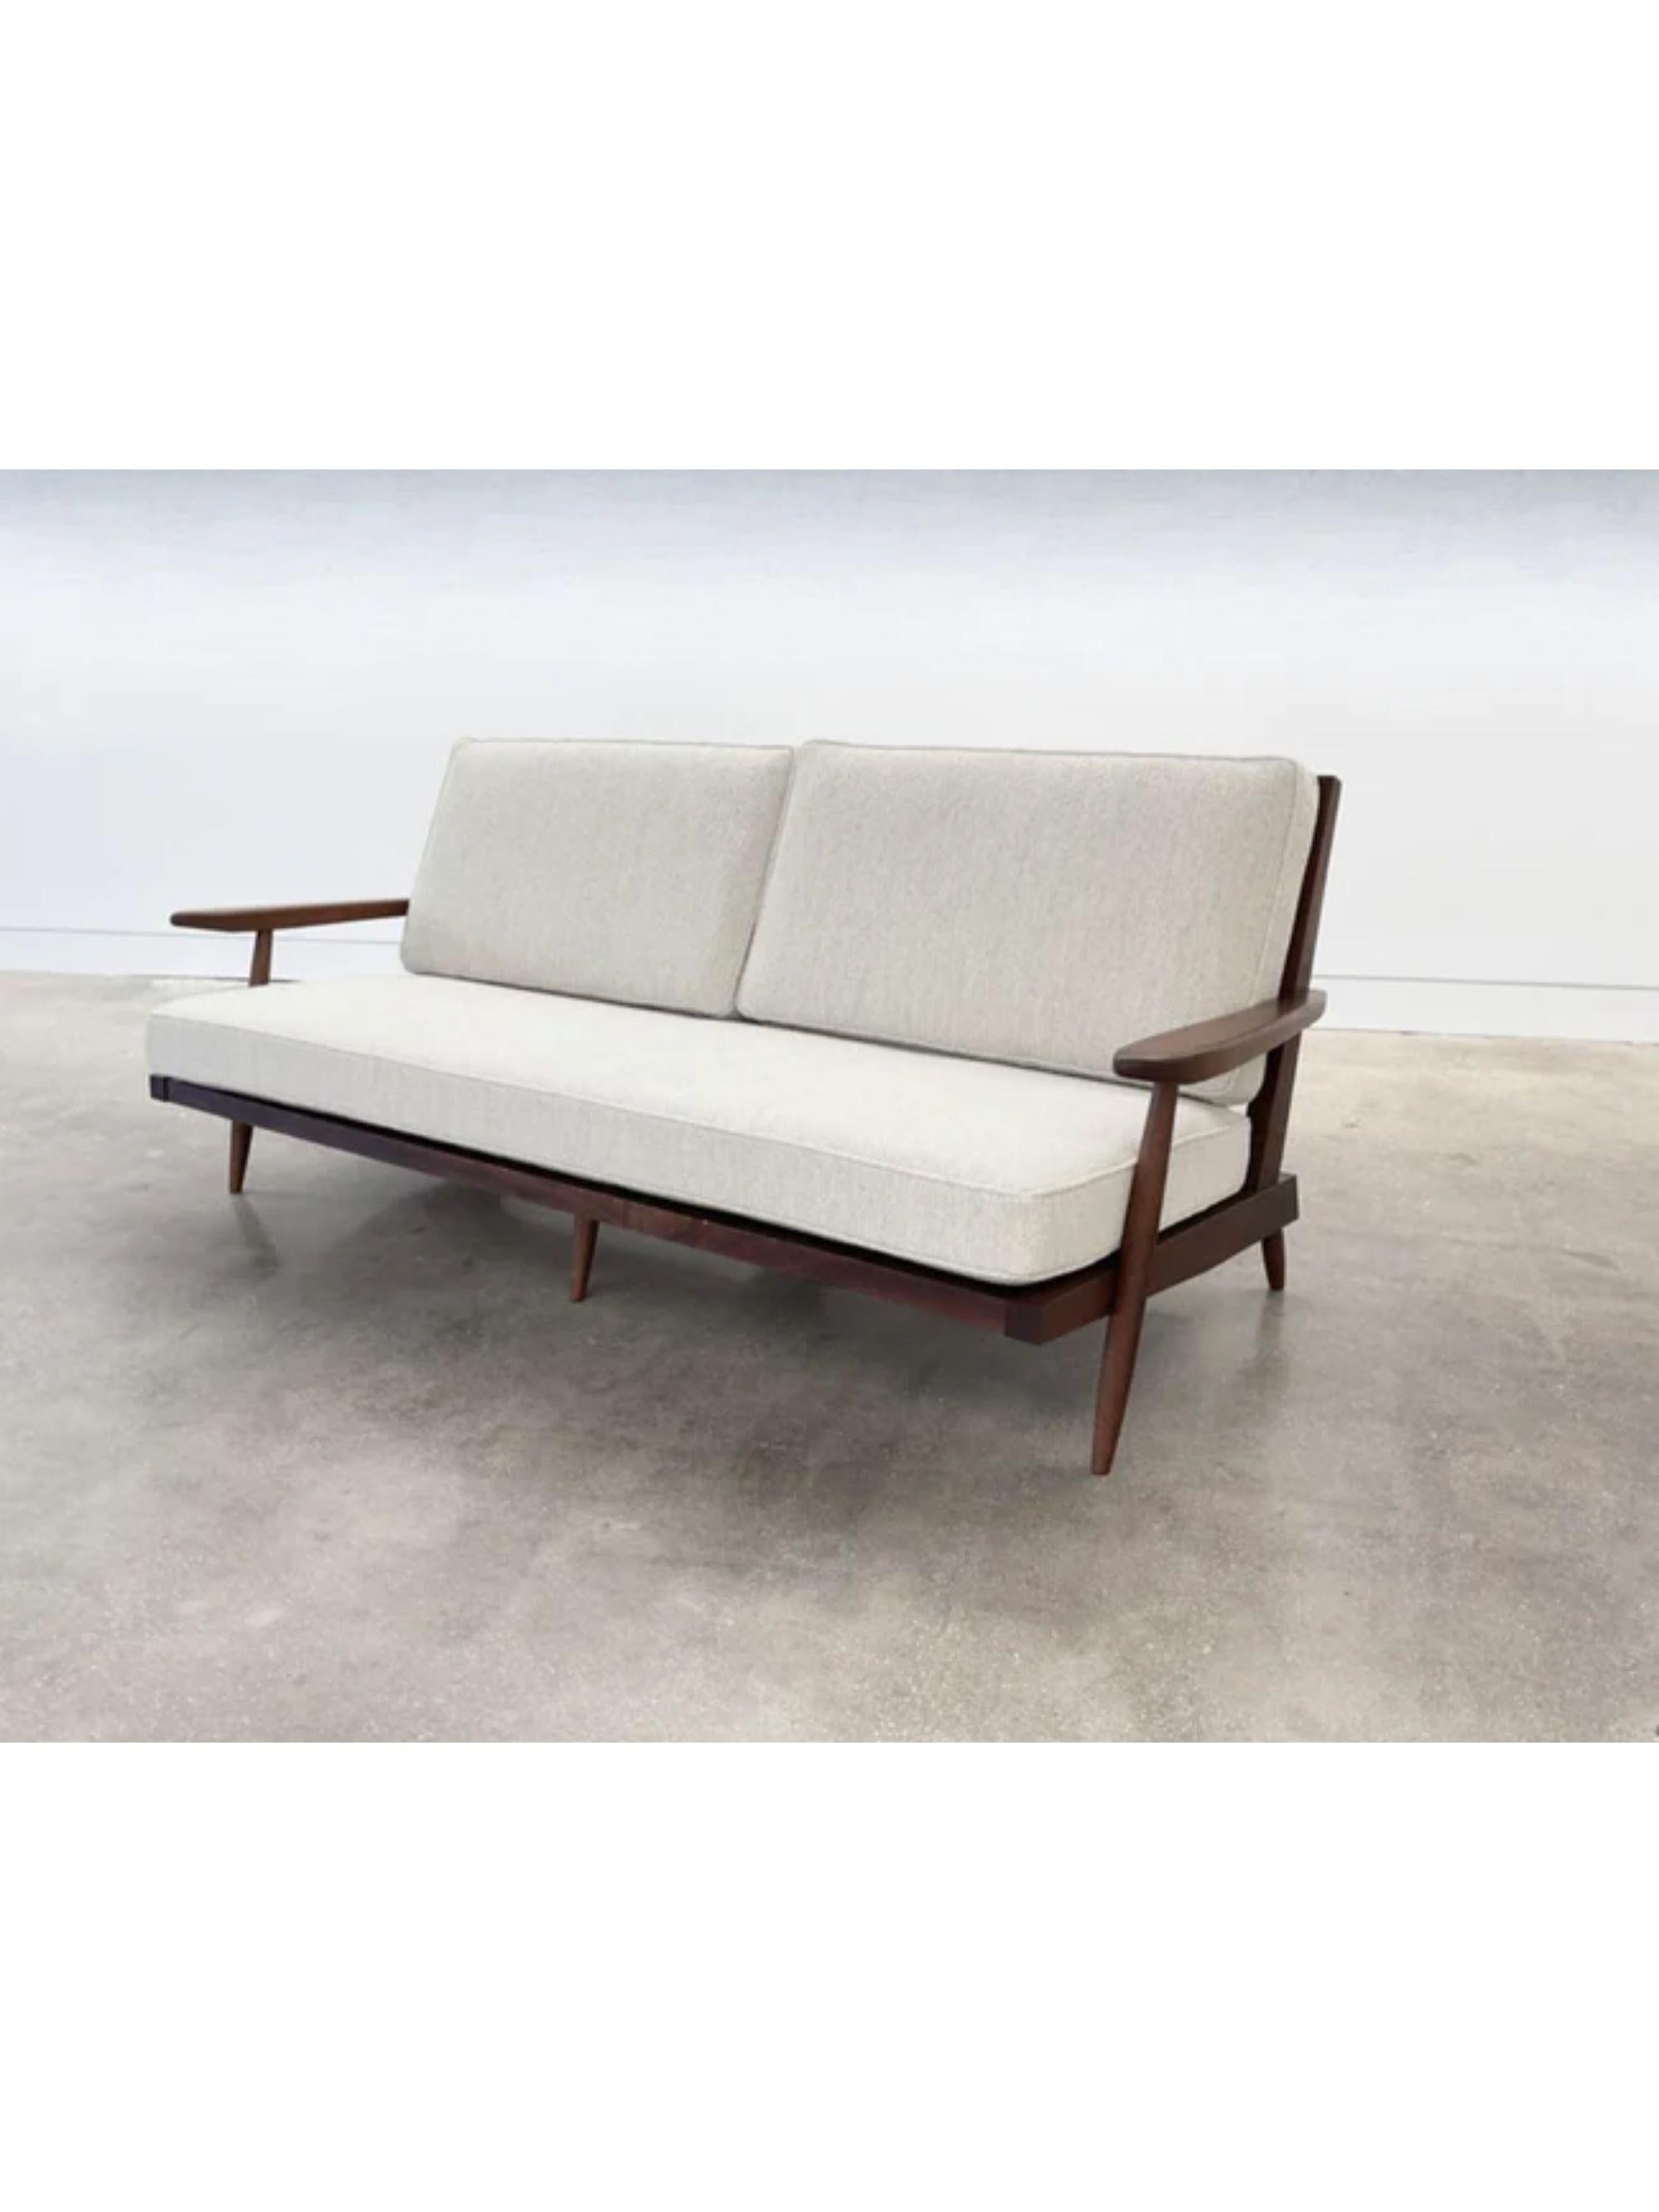 American George Nakashima “Cushion” three seat walnut sofa with arms, USA, 1961